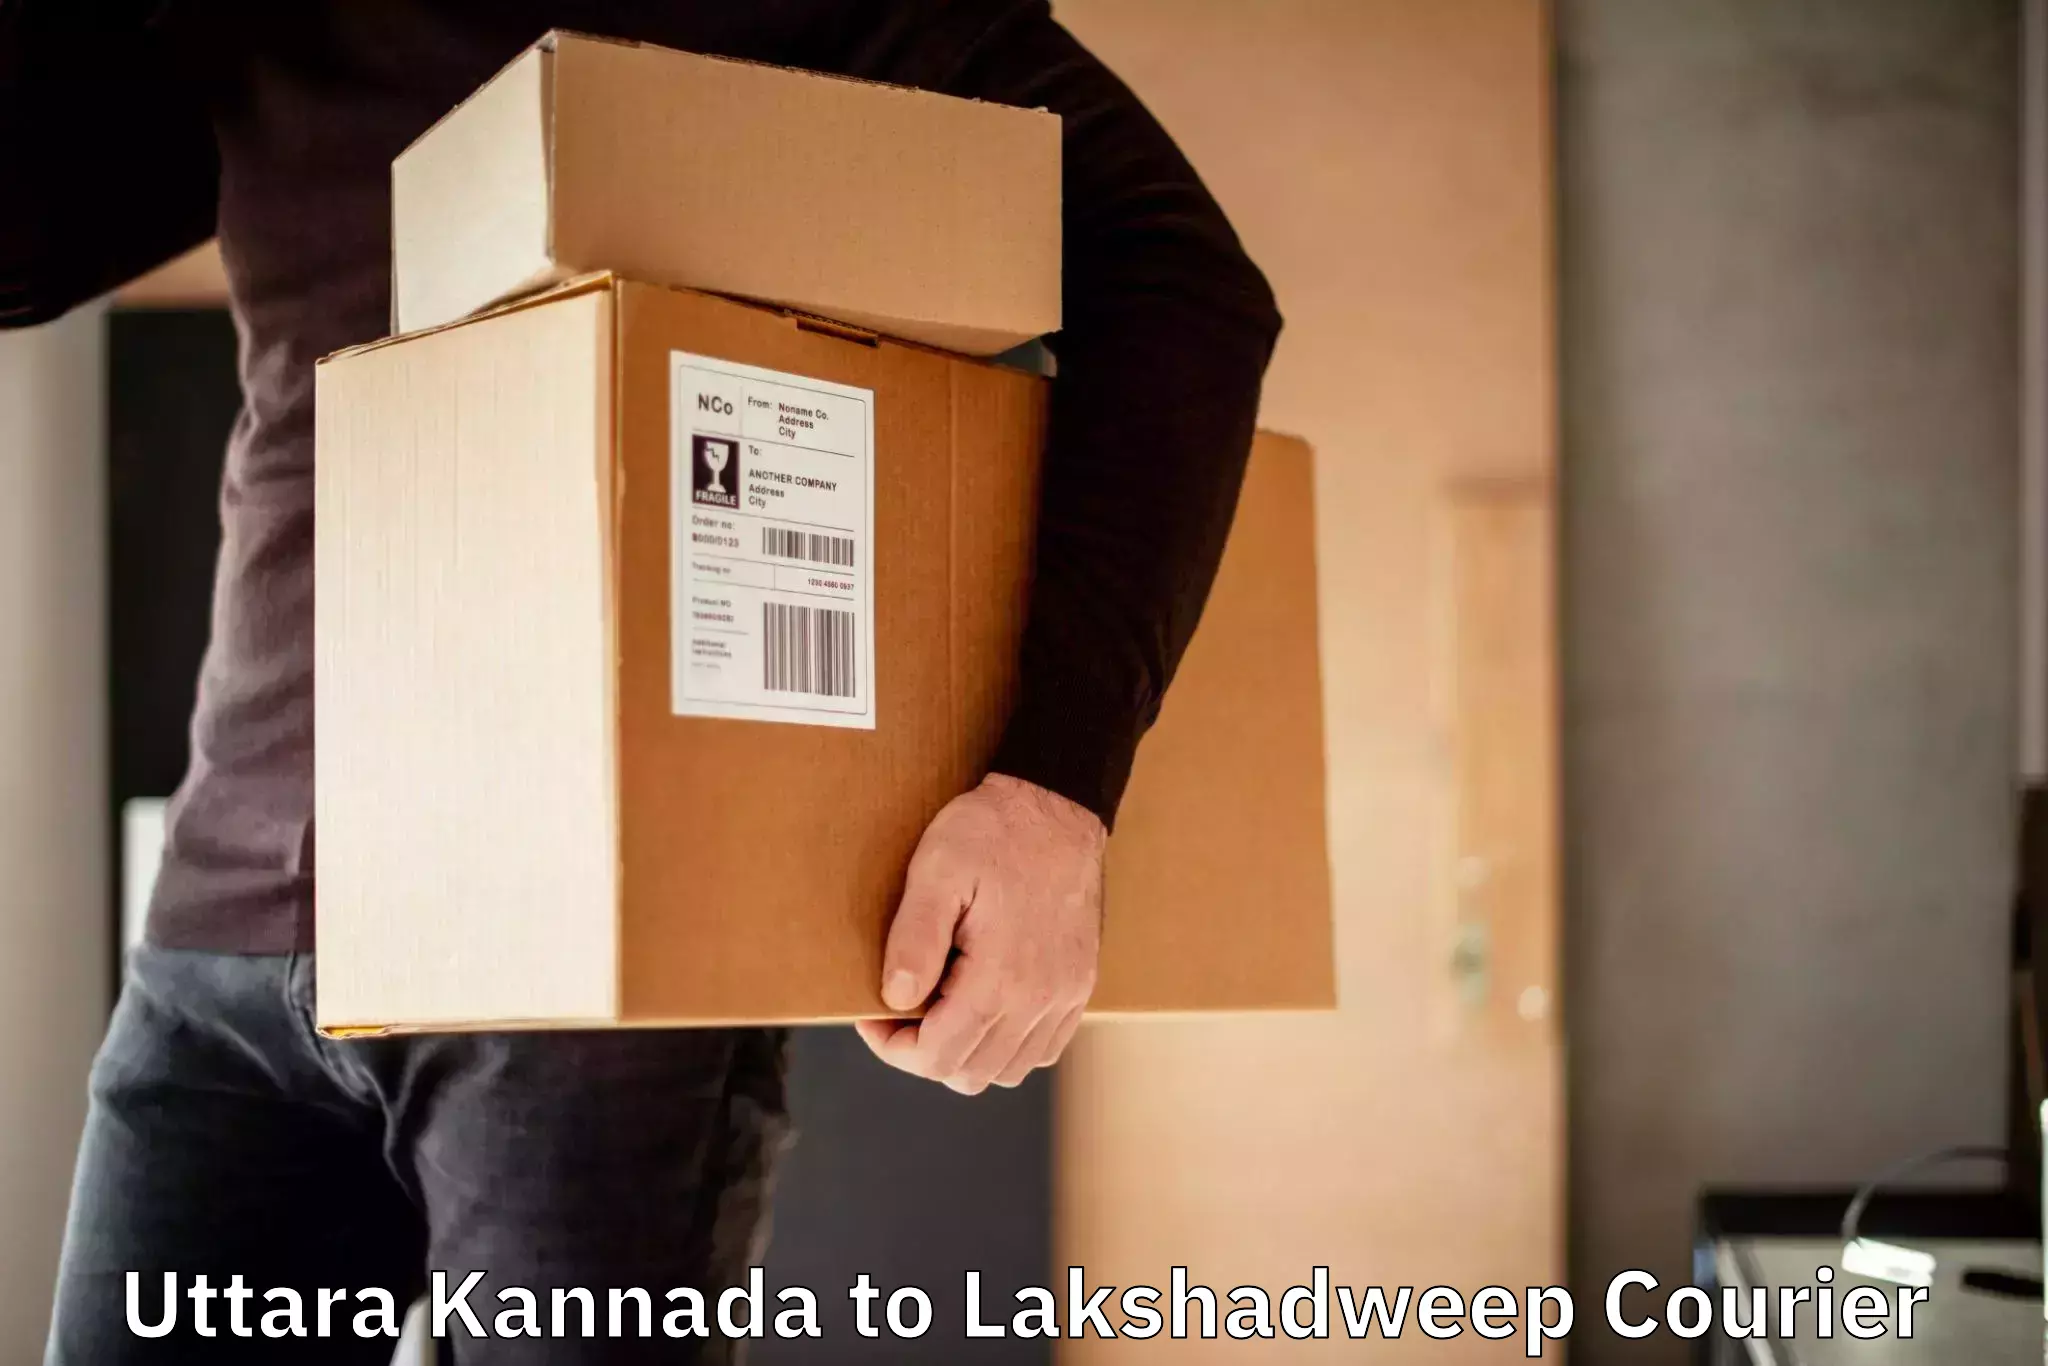 Personalized courier experiences Uttara Kannada to Lakshadweep